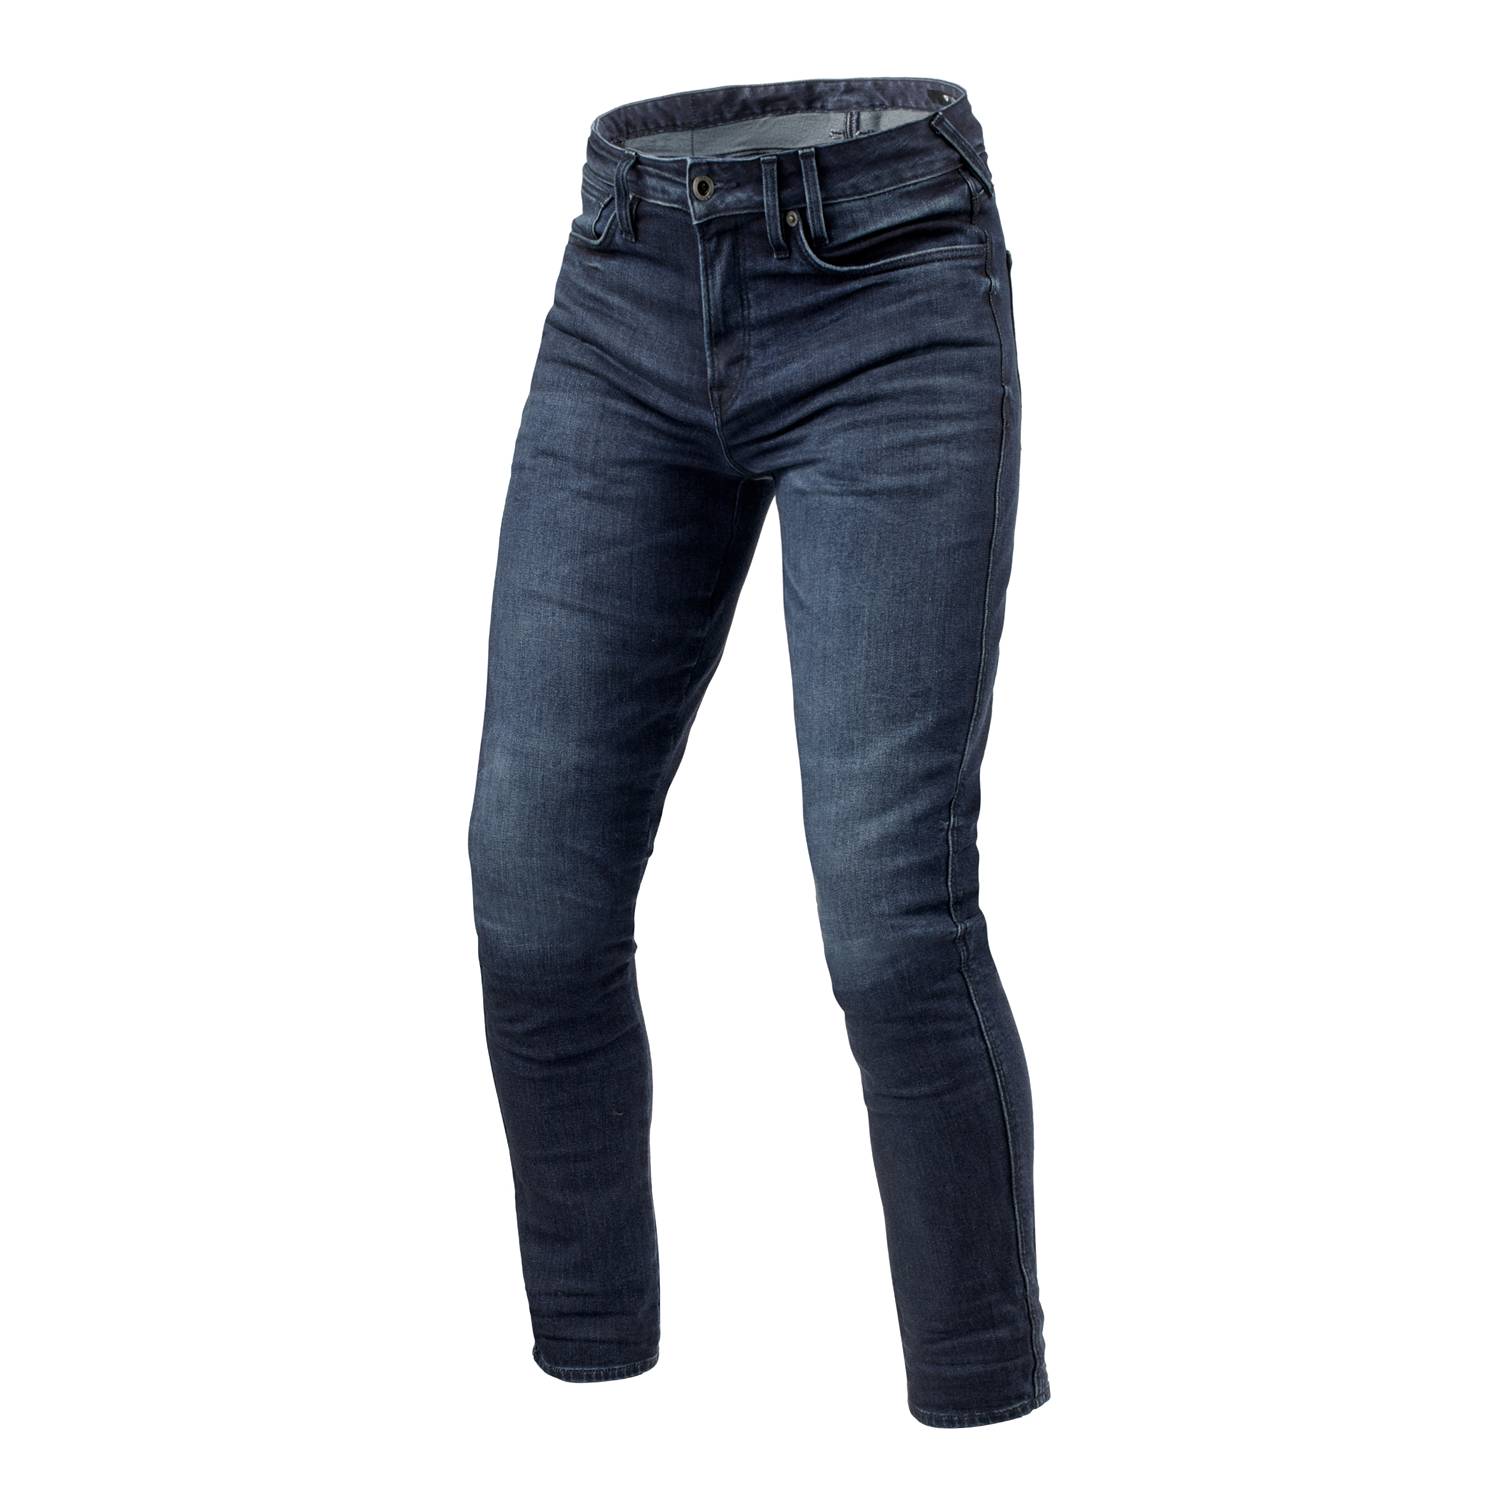 Image of REV'IT! Jeans Carlin SK Dark Blue Used L34 Motorcycle Jeans Größe L34/W28